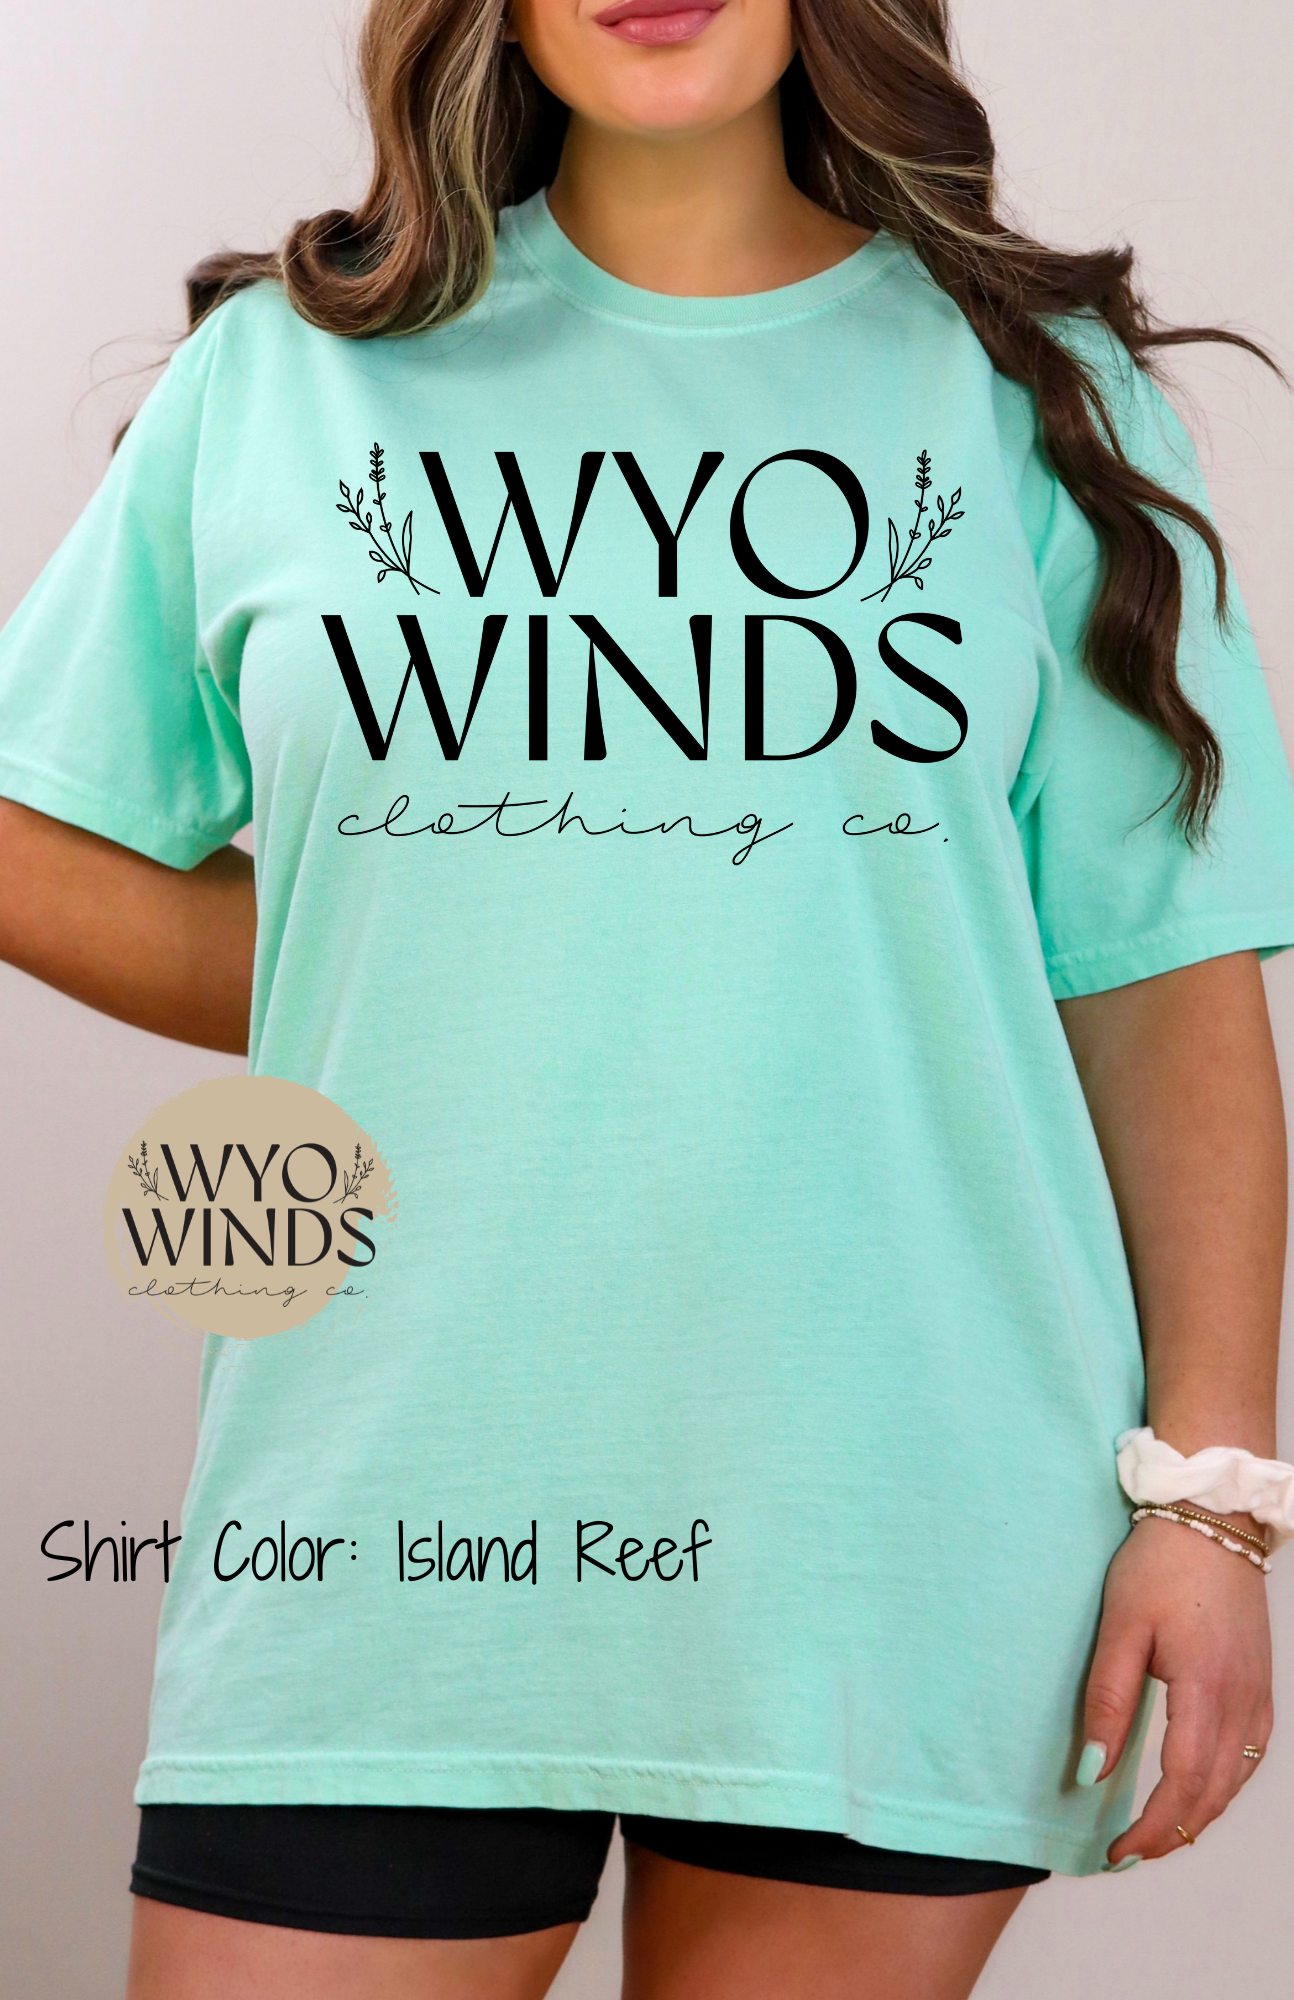 Wyo Winds Clothing Co